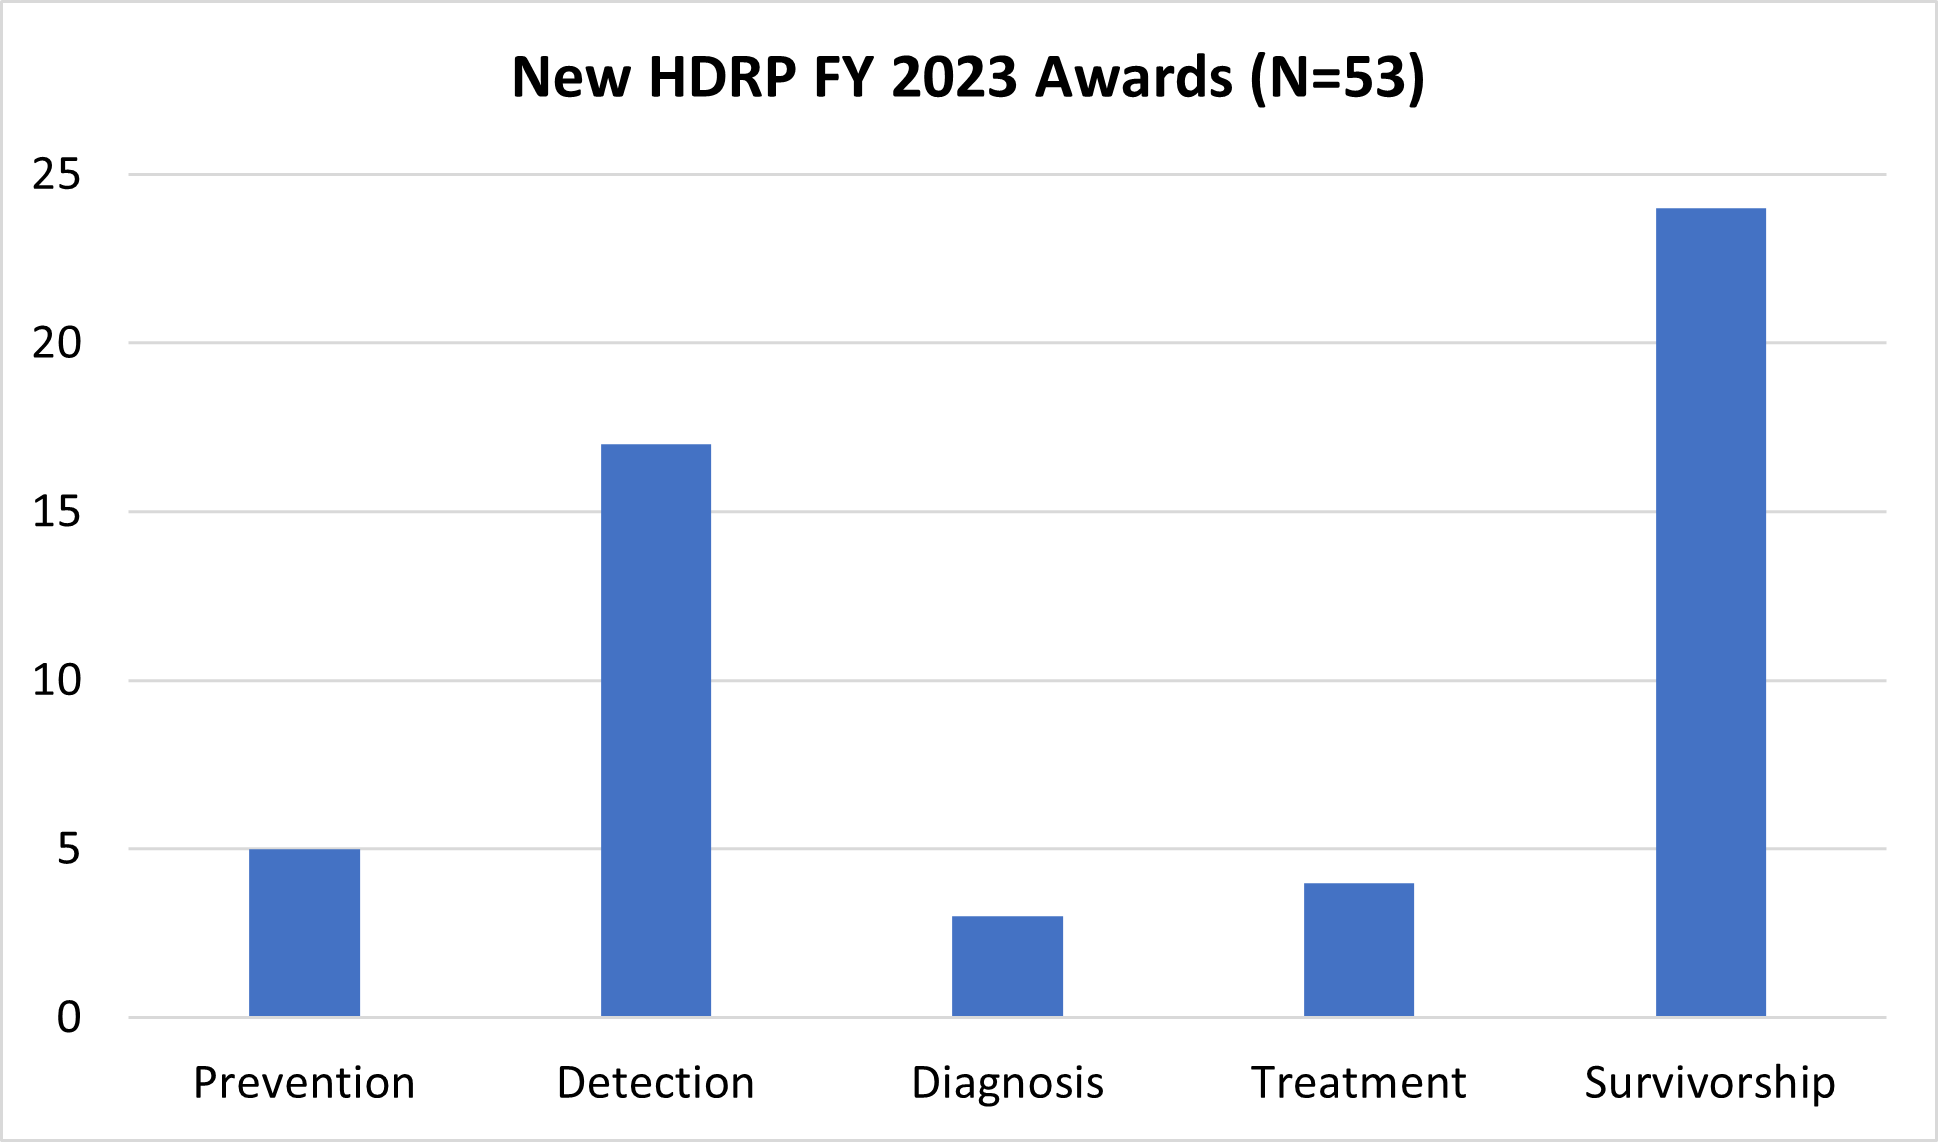 New HDRP 2023 awards: Prevention - 5, Detection - 17, Diagnosis - 3, Treatment - 4, Survivorship - 24. 53 total.